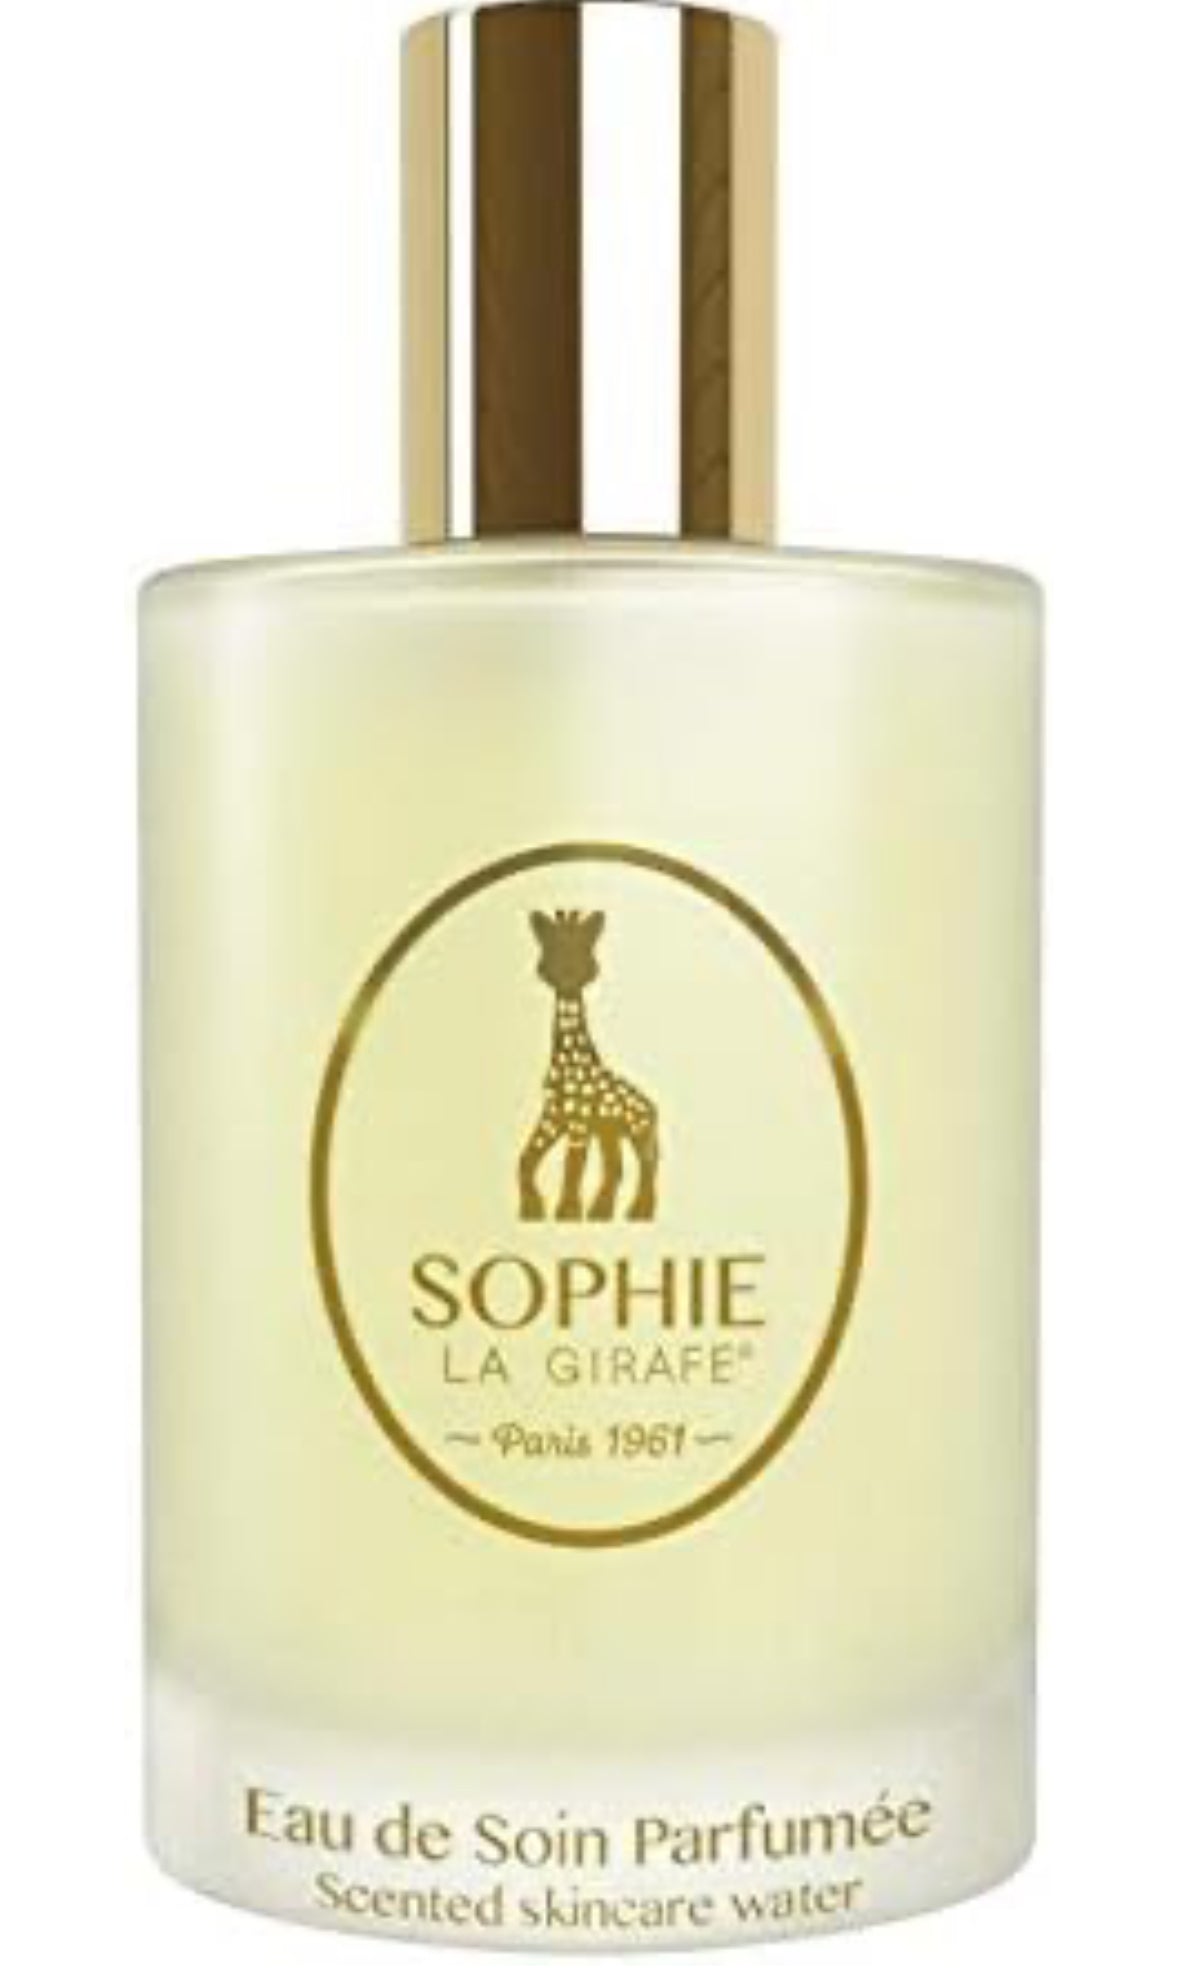 Sophie La Girafe Eau de Soiin Parfumee Scented Skincare Water, 100ml